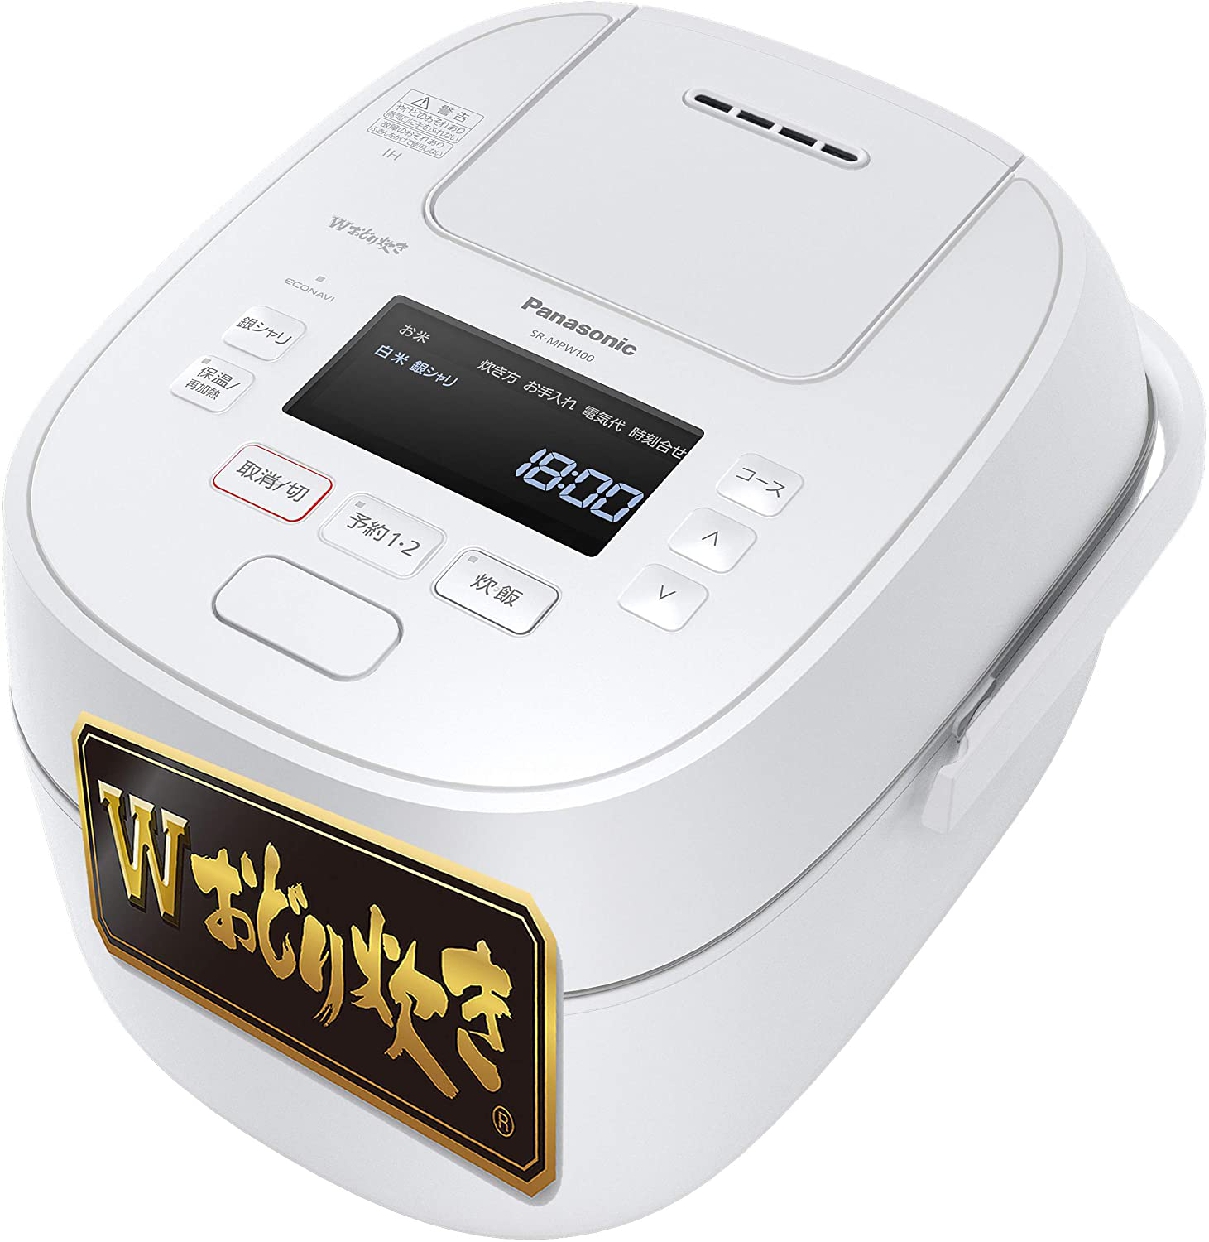 Panasonic(パナソニック) 可変圧力IHジャー炊飯器 SR-MPW100-W ホワイトの商品画像1 